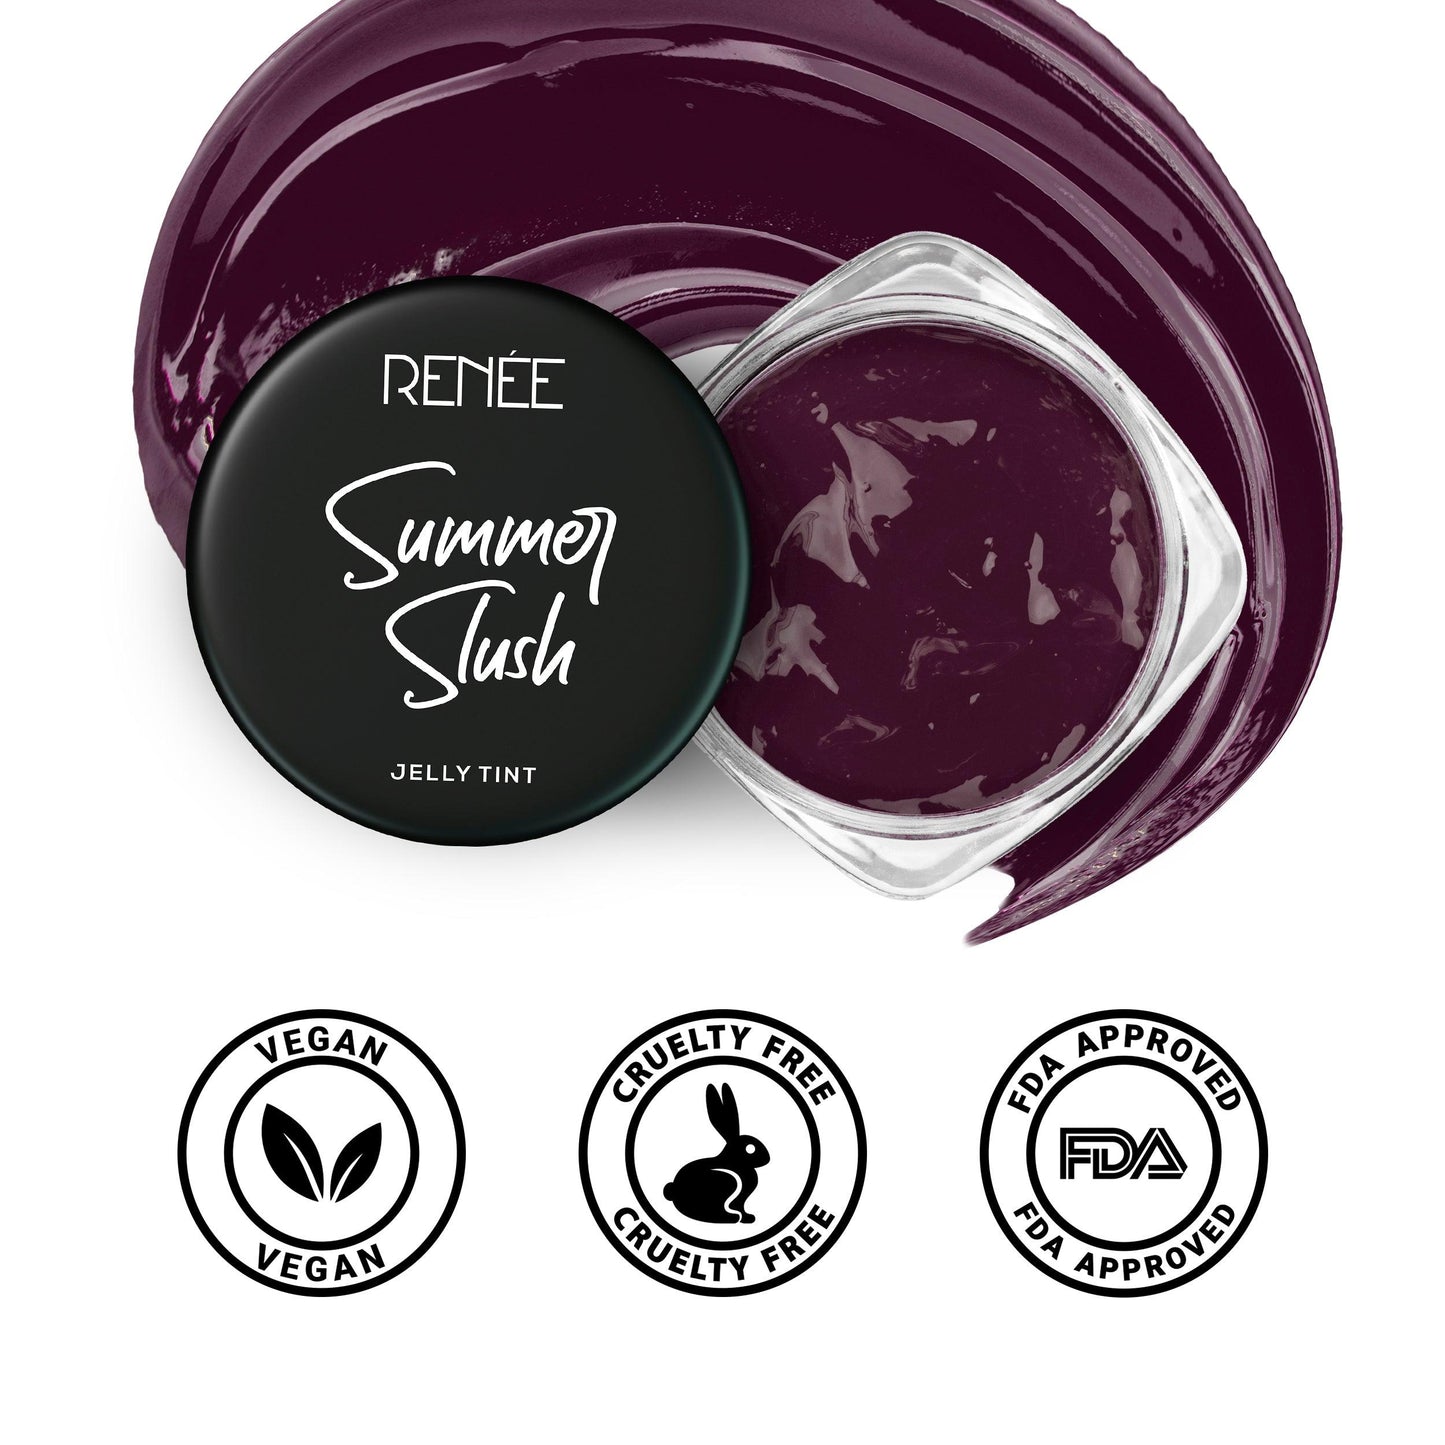 Renee Summer Slush Jelly Tint 13gm - Tempting Grape